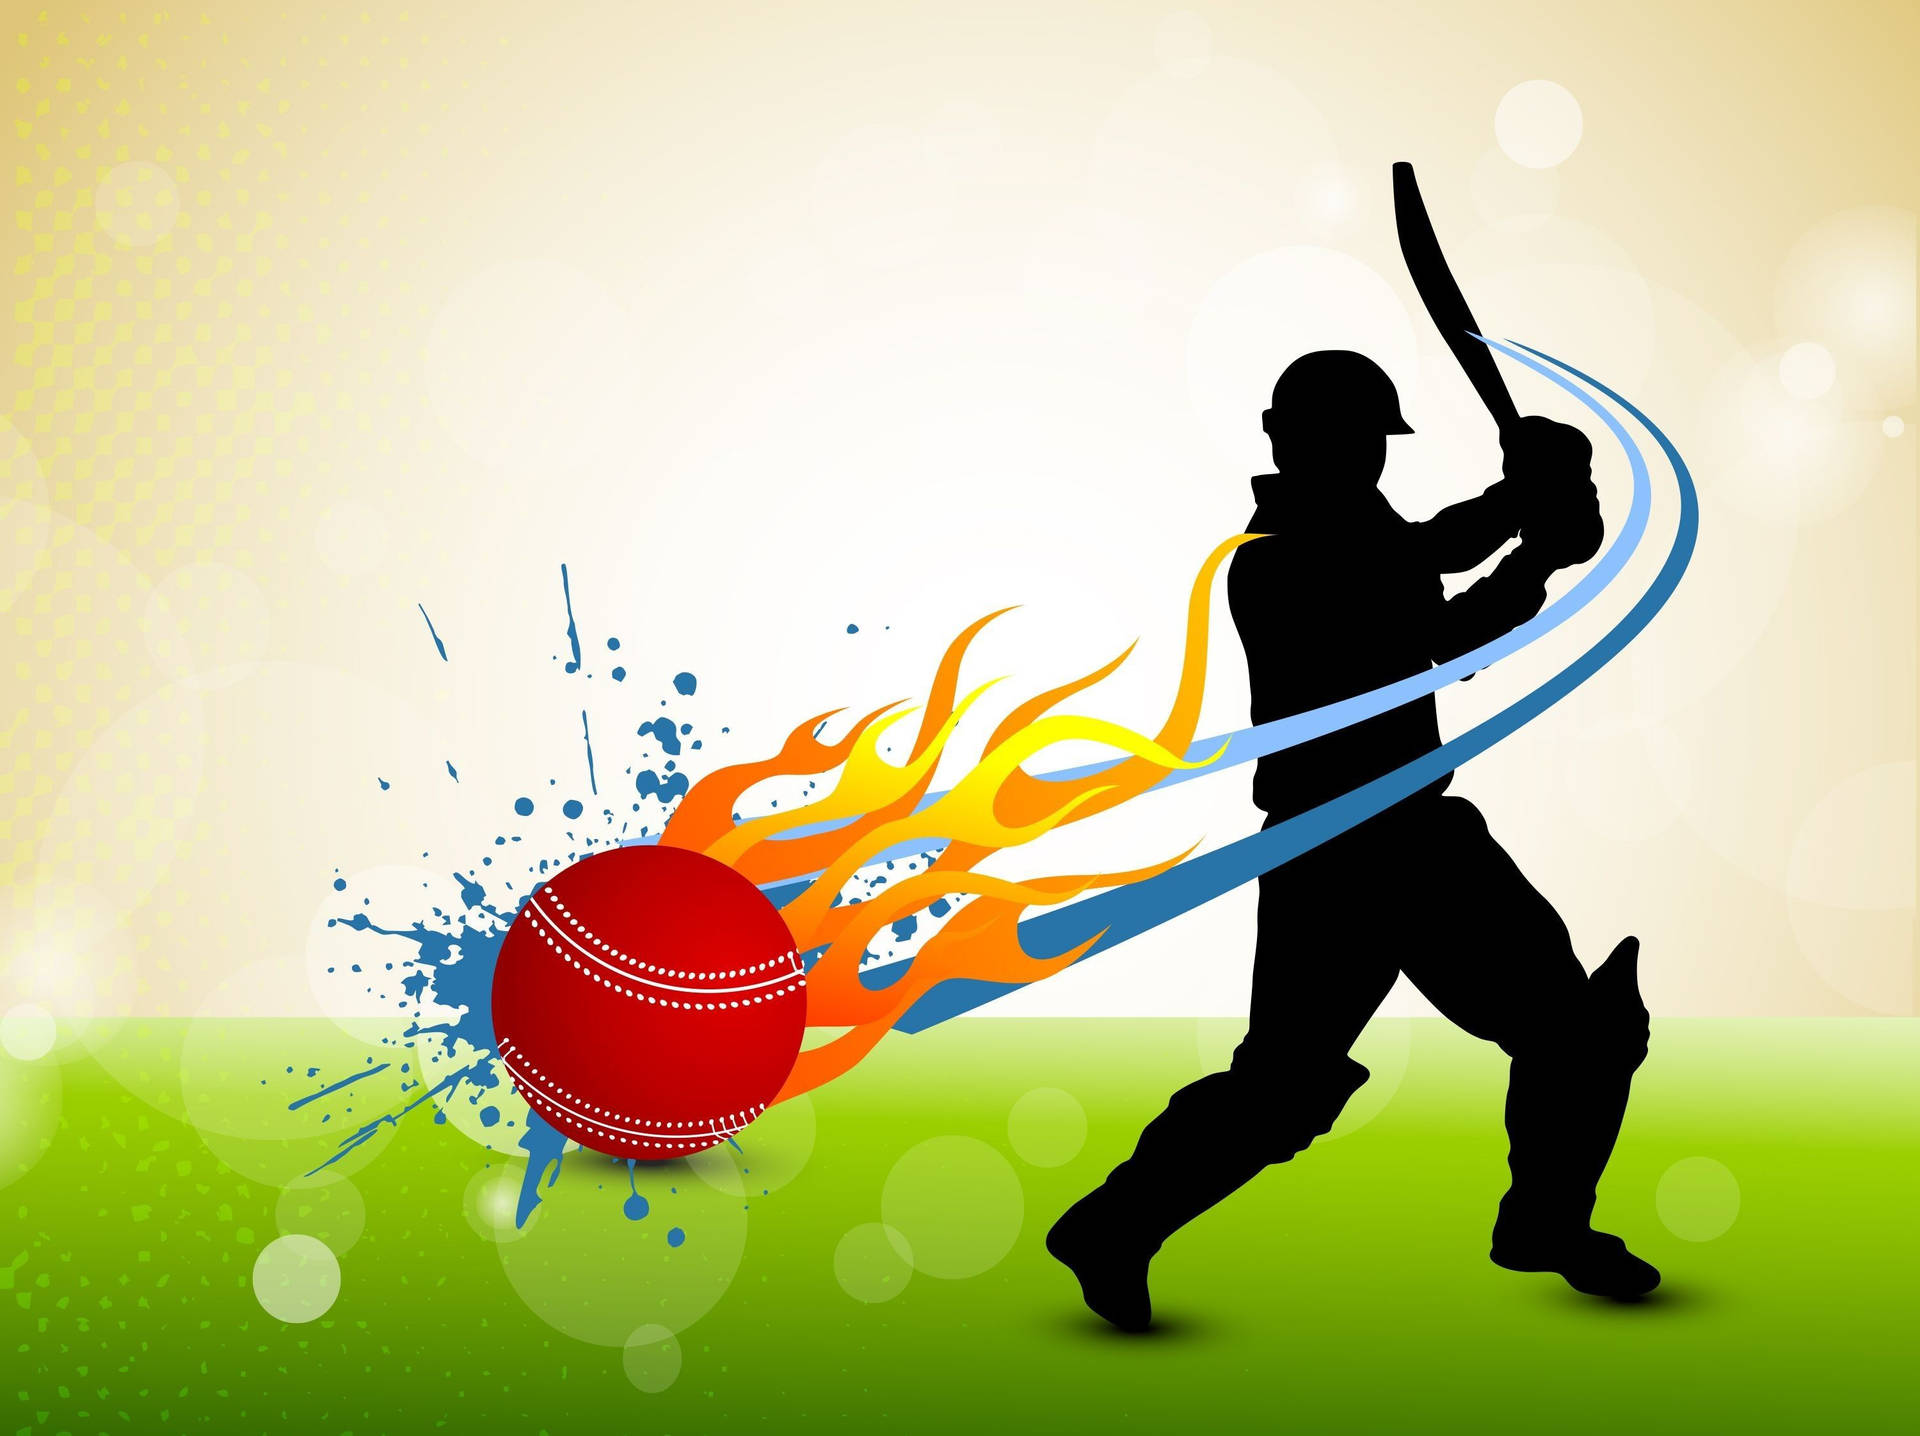 Cricket Play In Digital Image